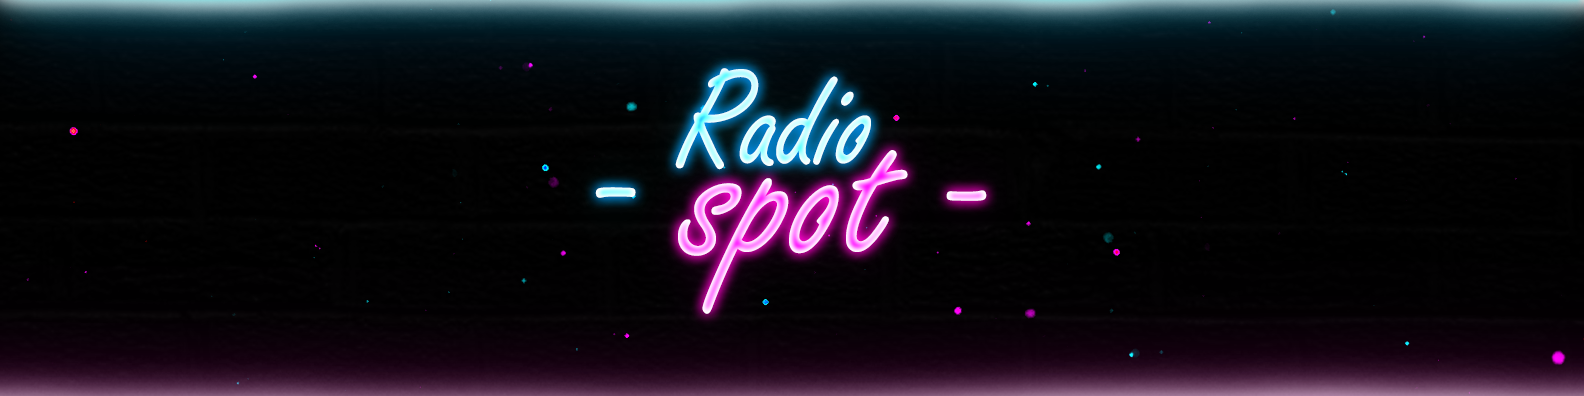 Radio-Spot.png